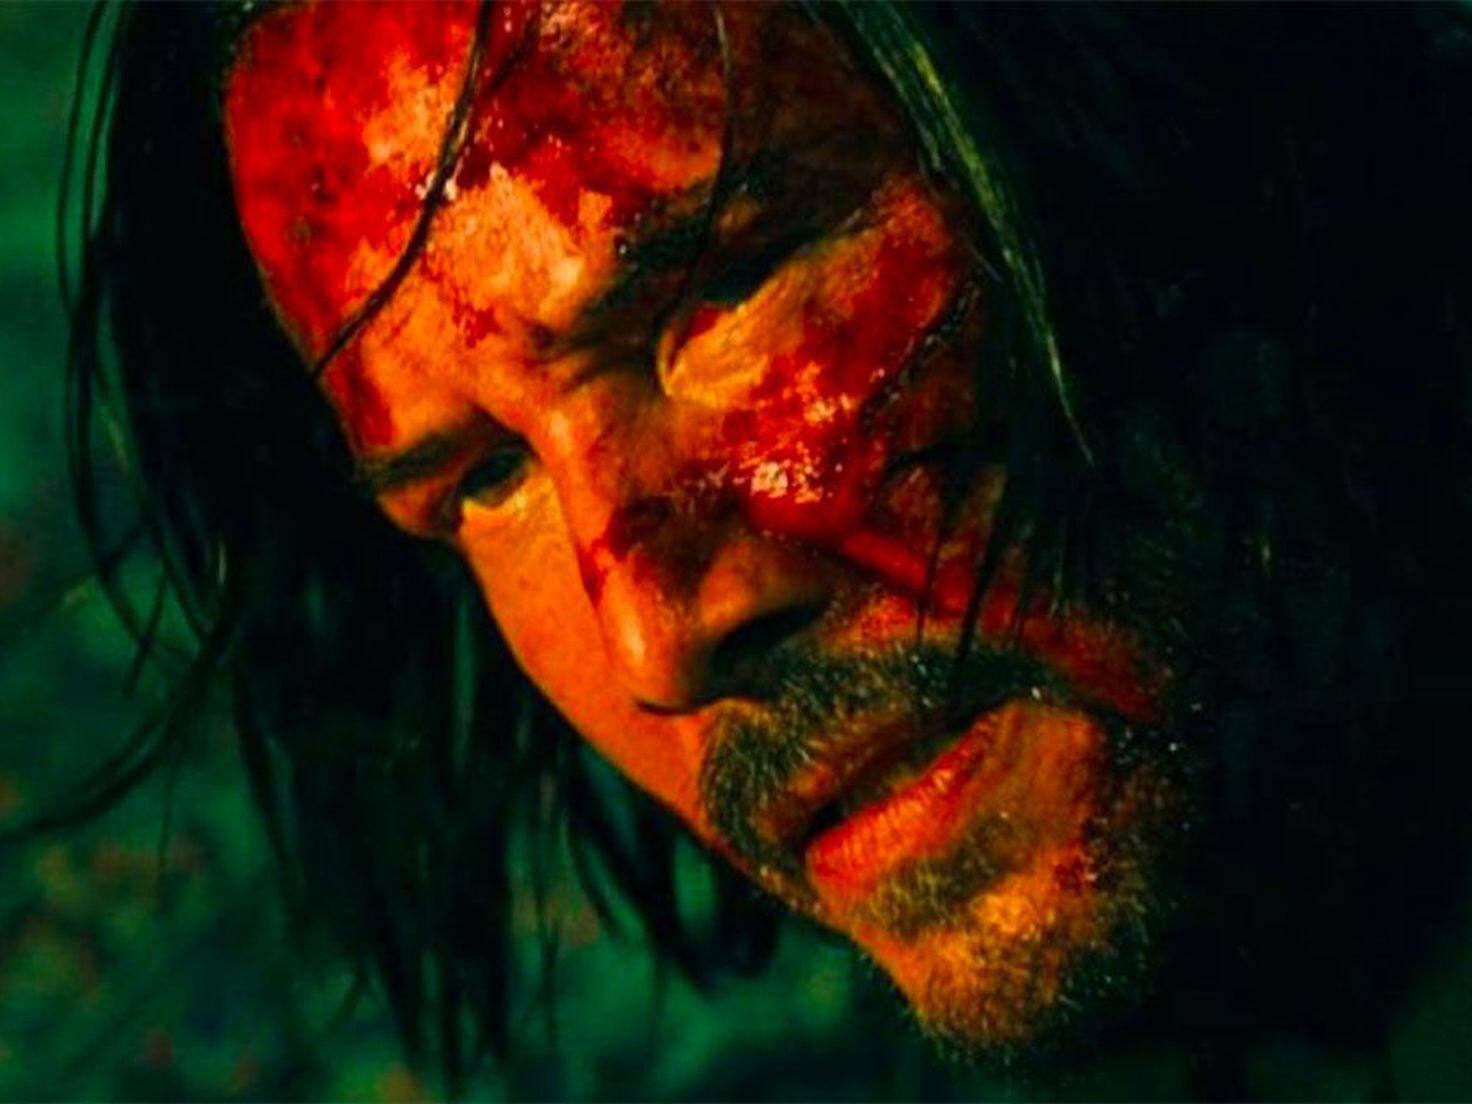 John Wick 4' Trailer: Keanu Reeves Is Back in Sequel